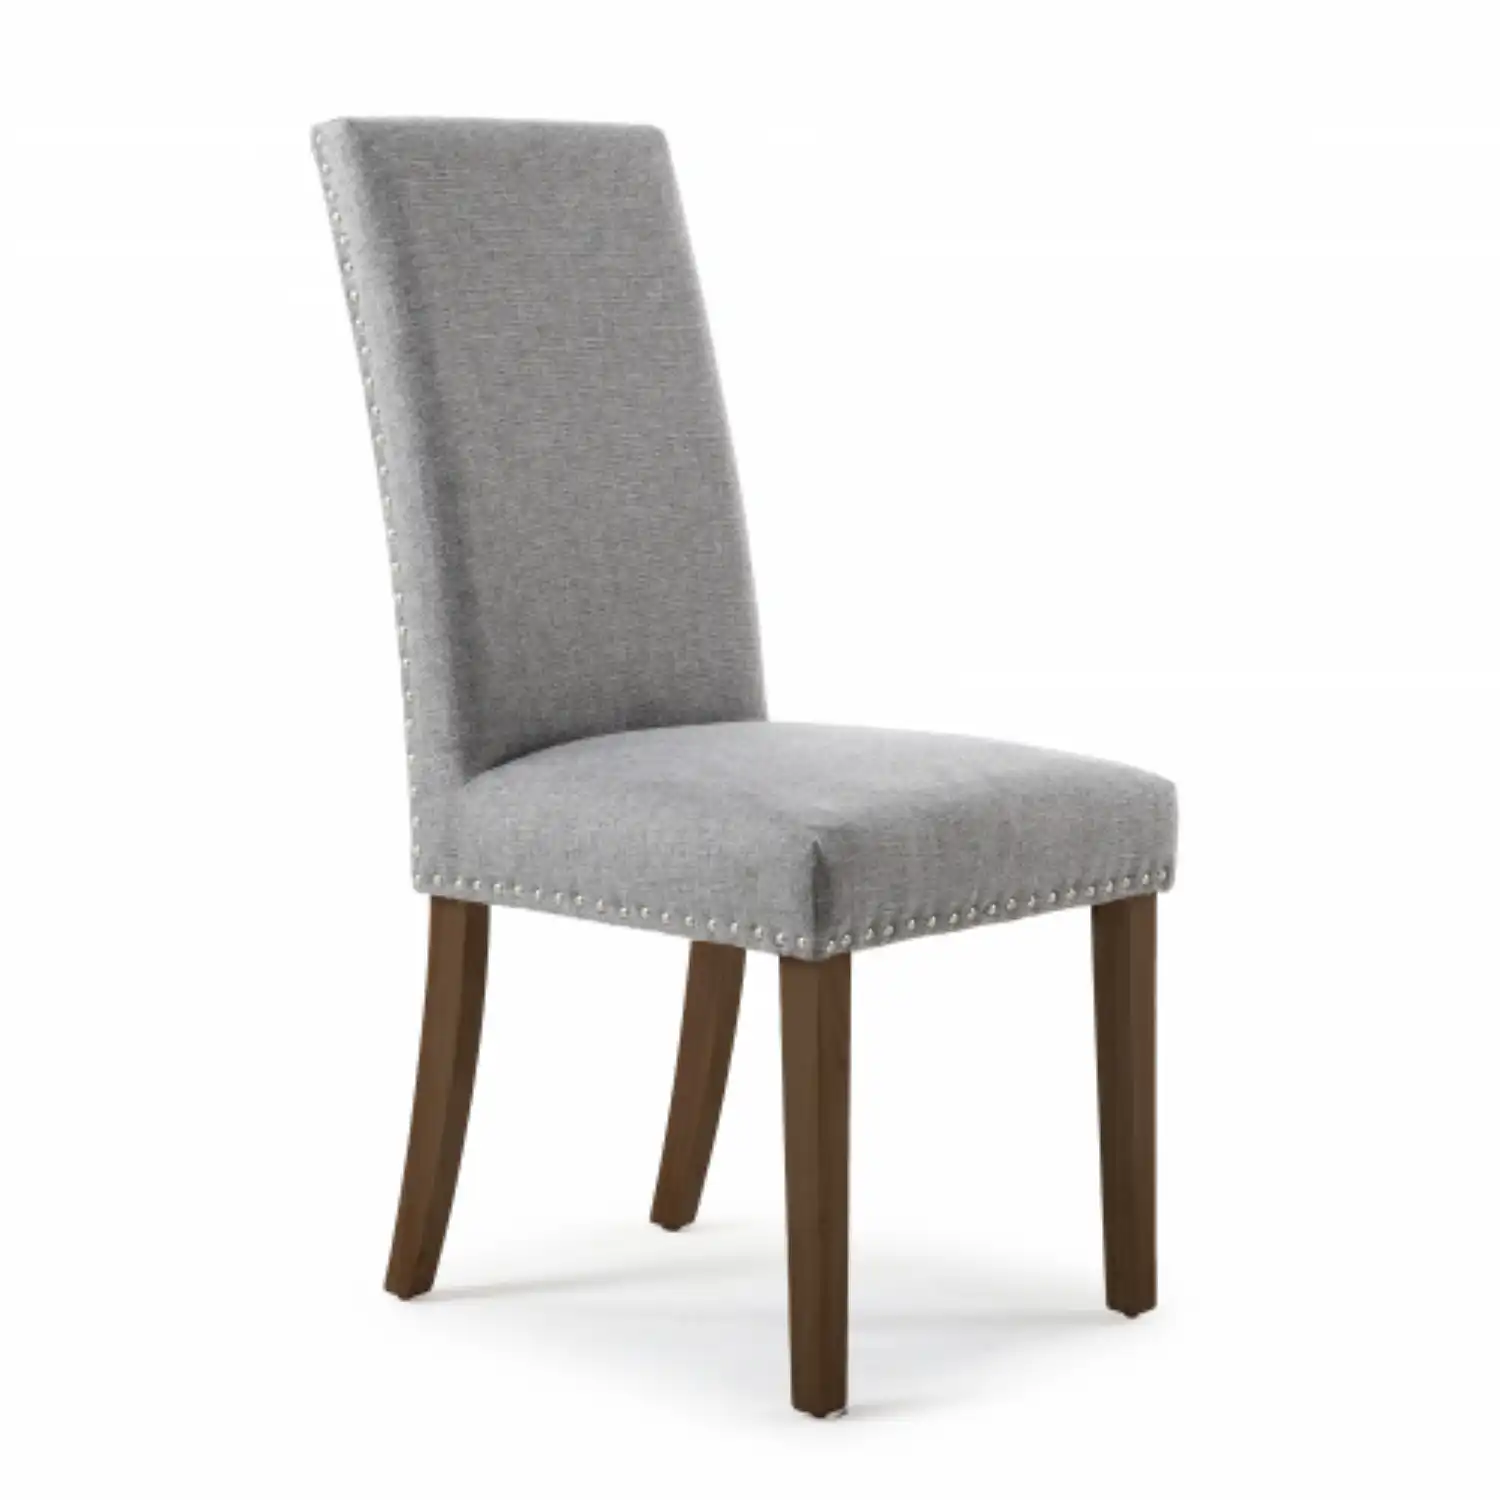 Silver Grey Linen Dining Chair Dark Wood Legs